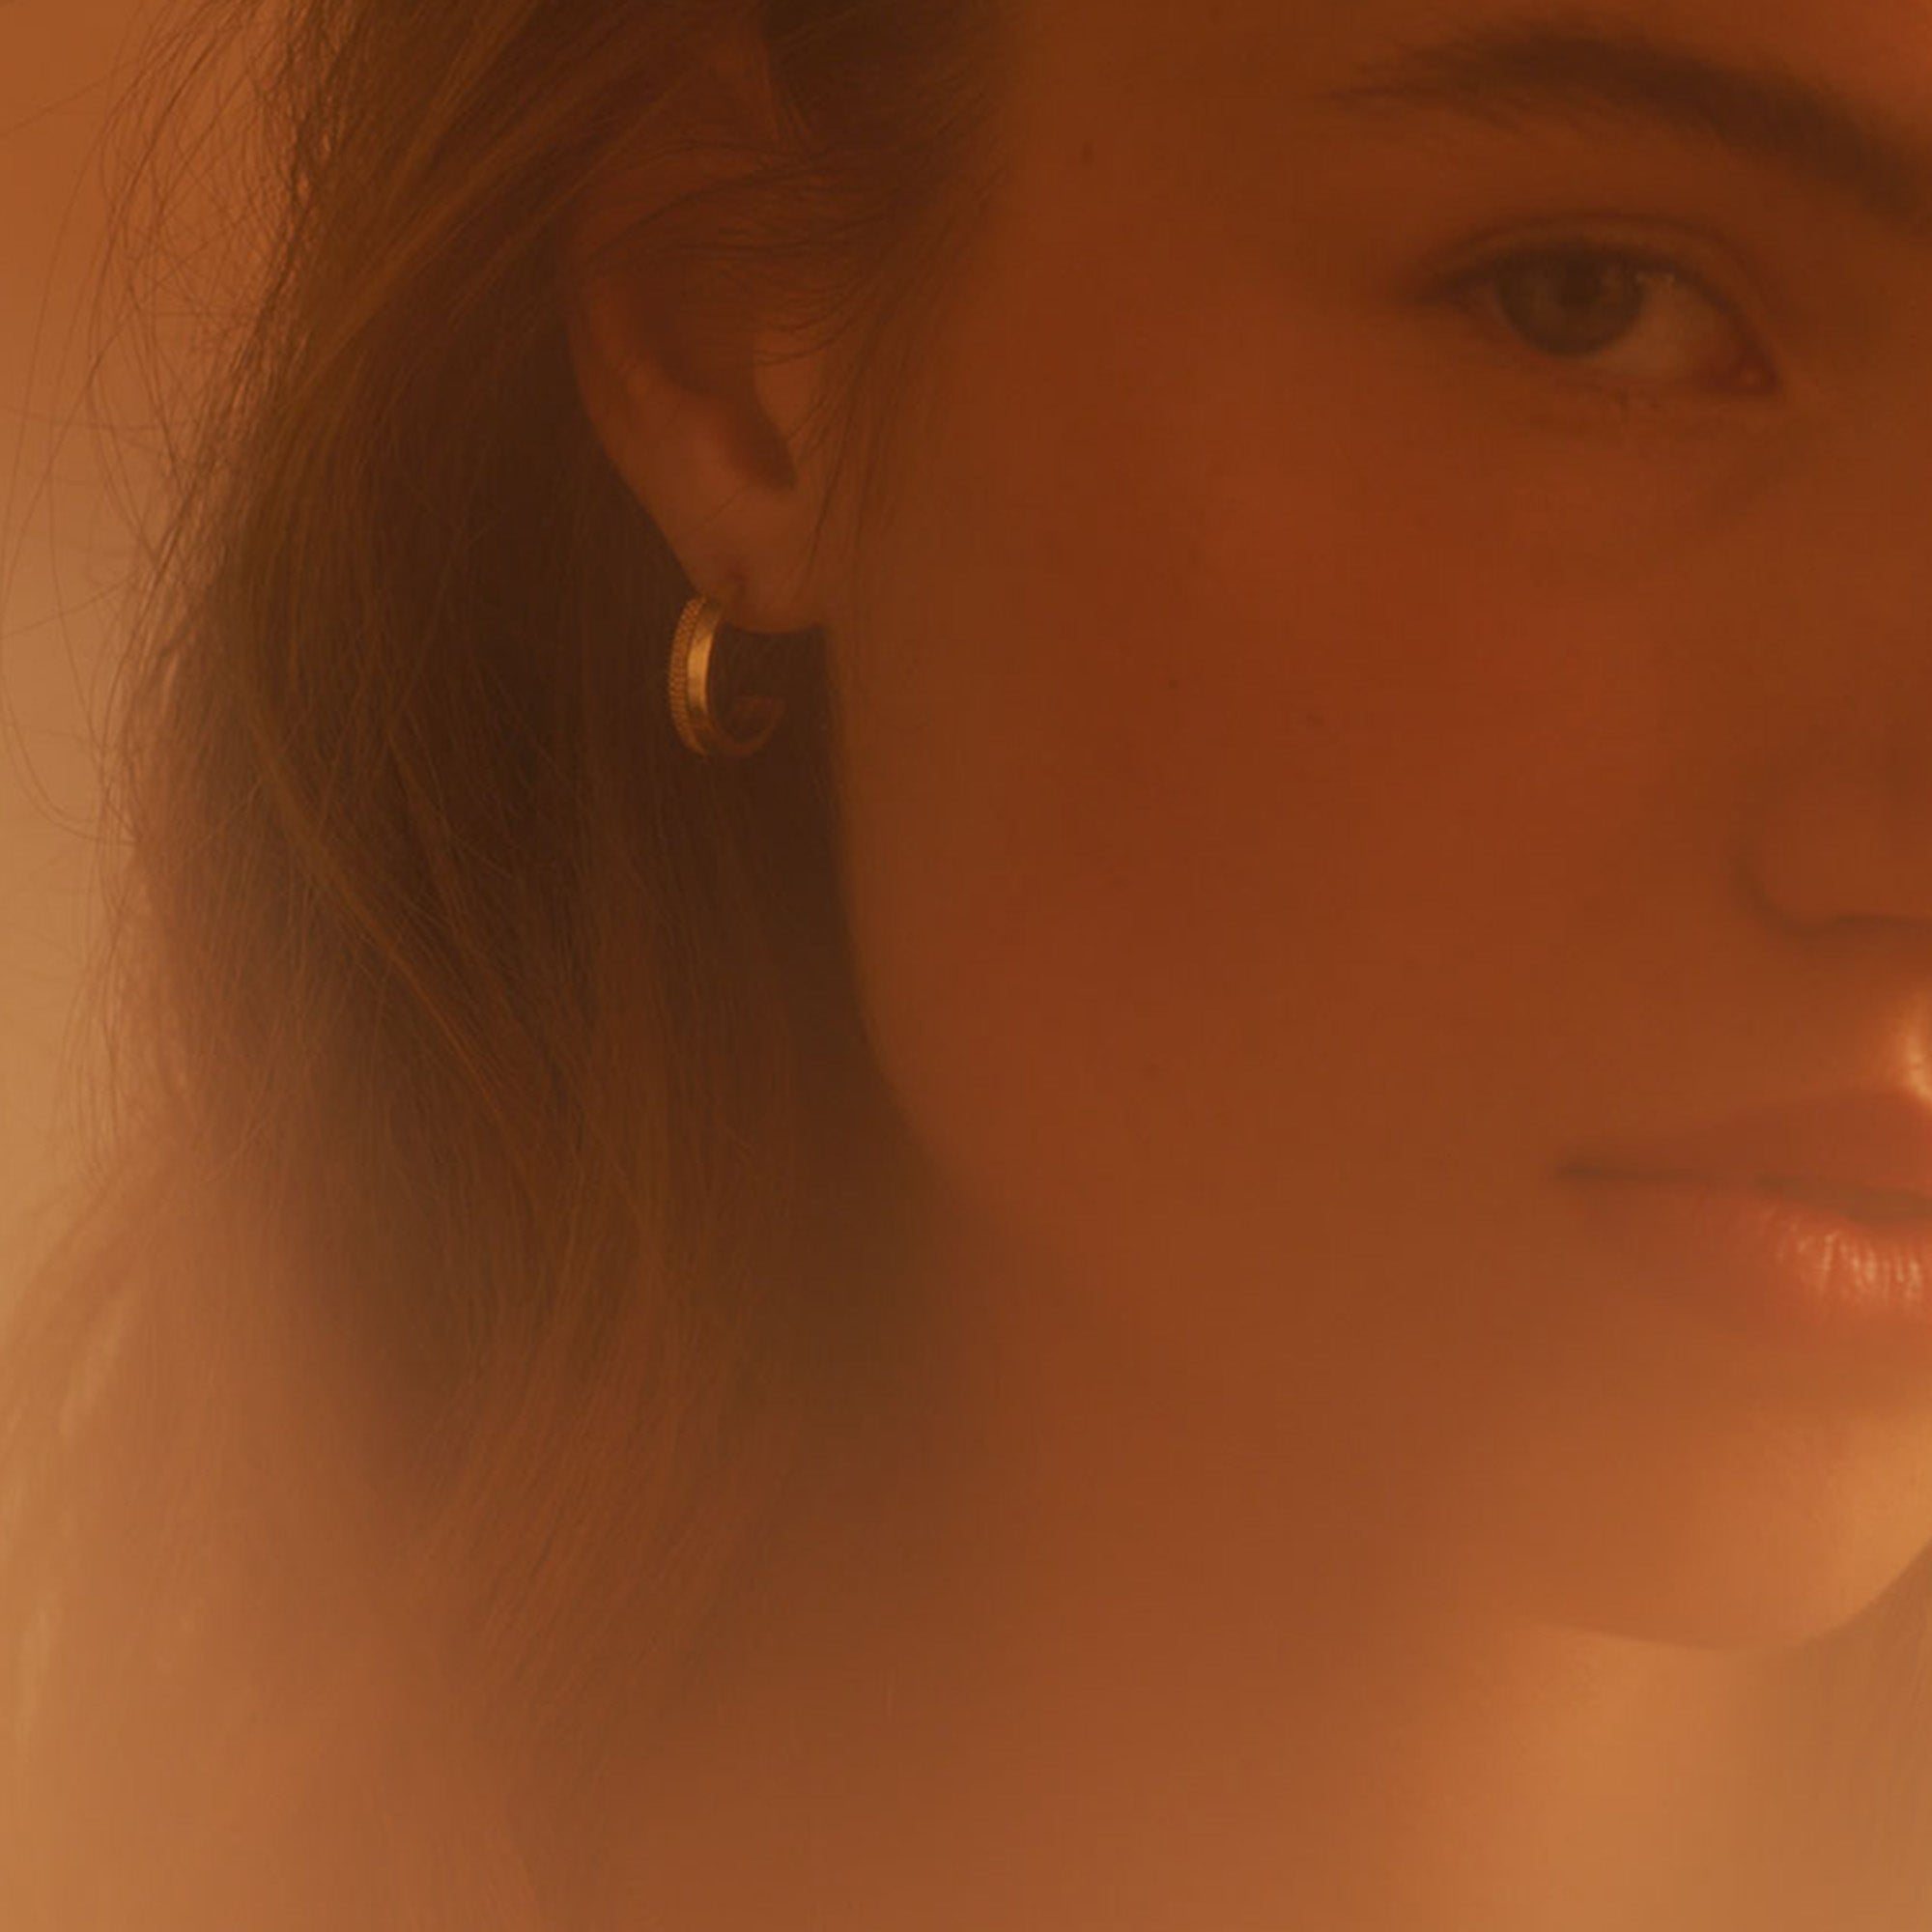 A model looking through hazy light wearing a gold hoop earringarrings